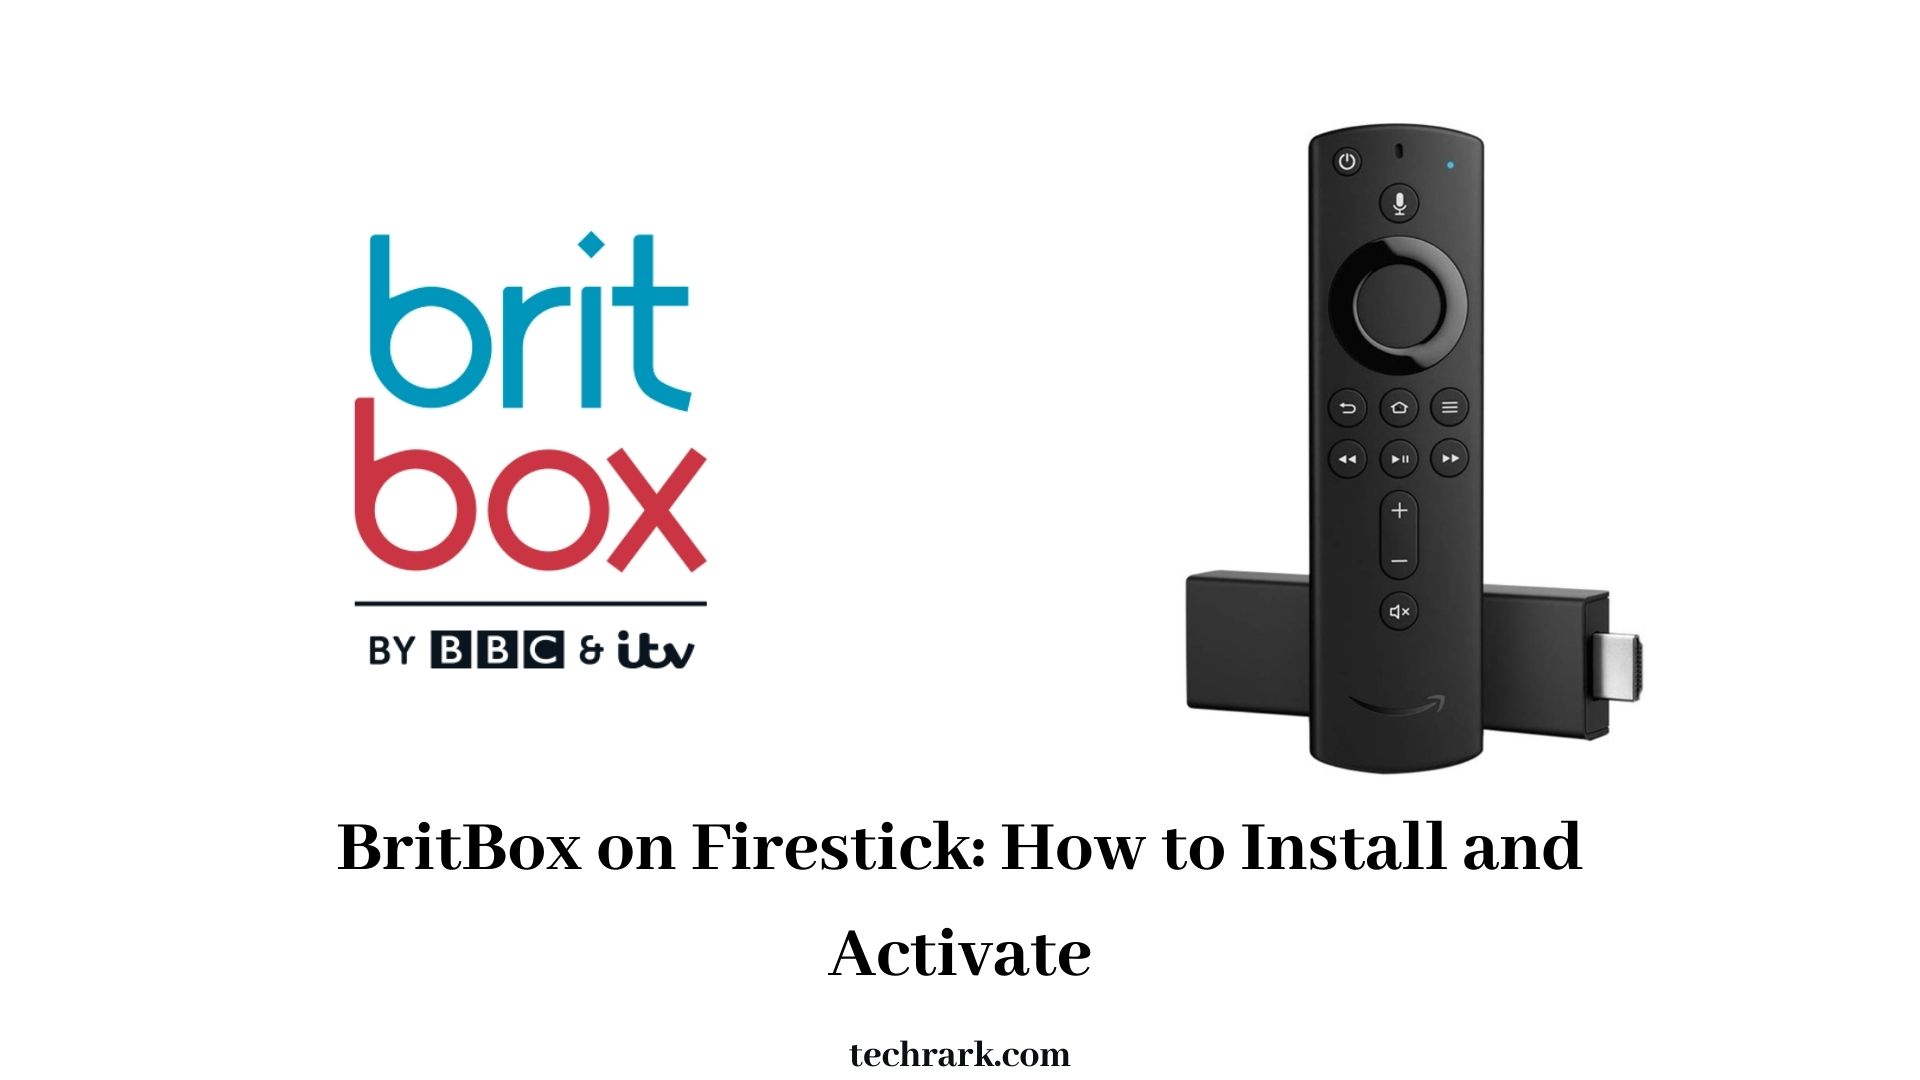 BritBox on Firestick